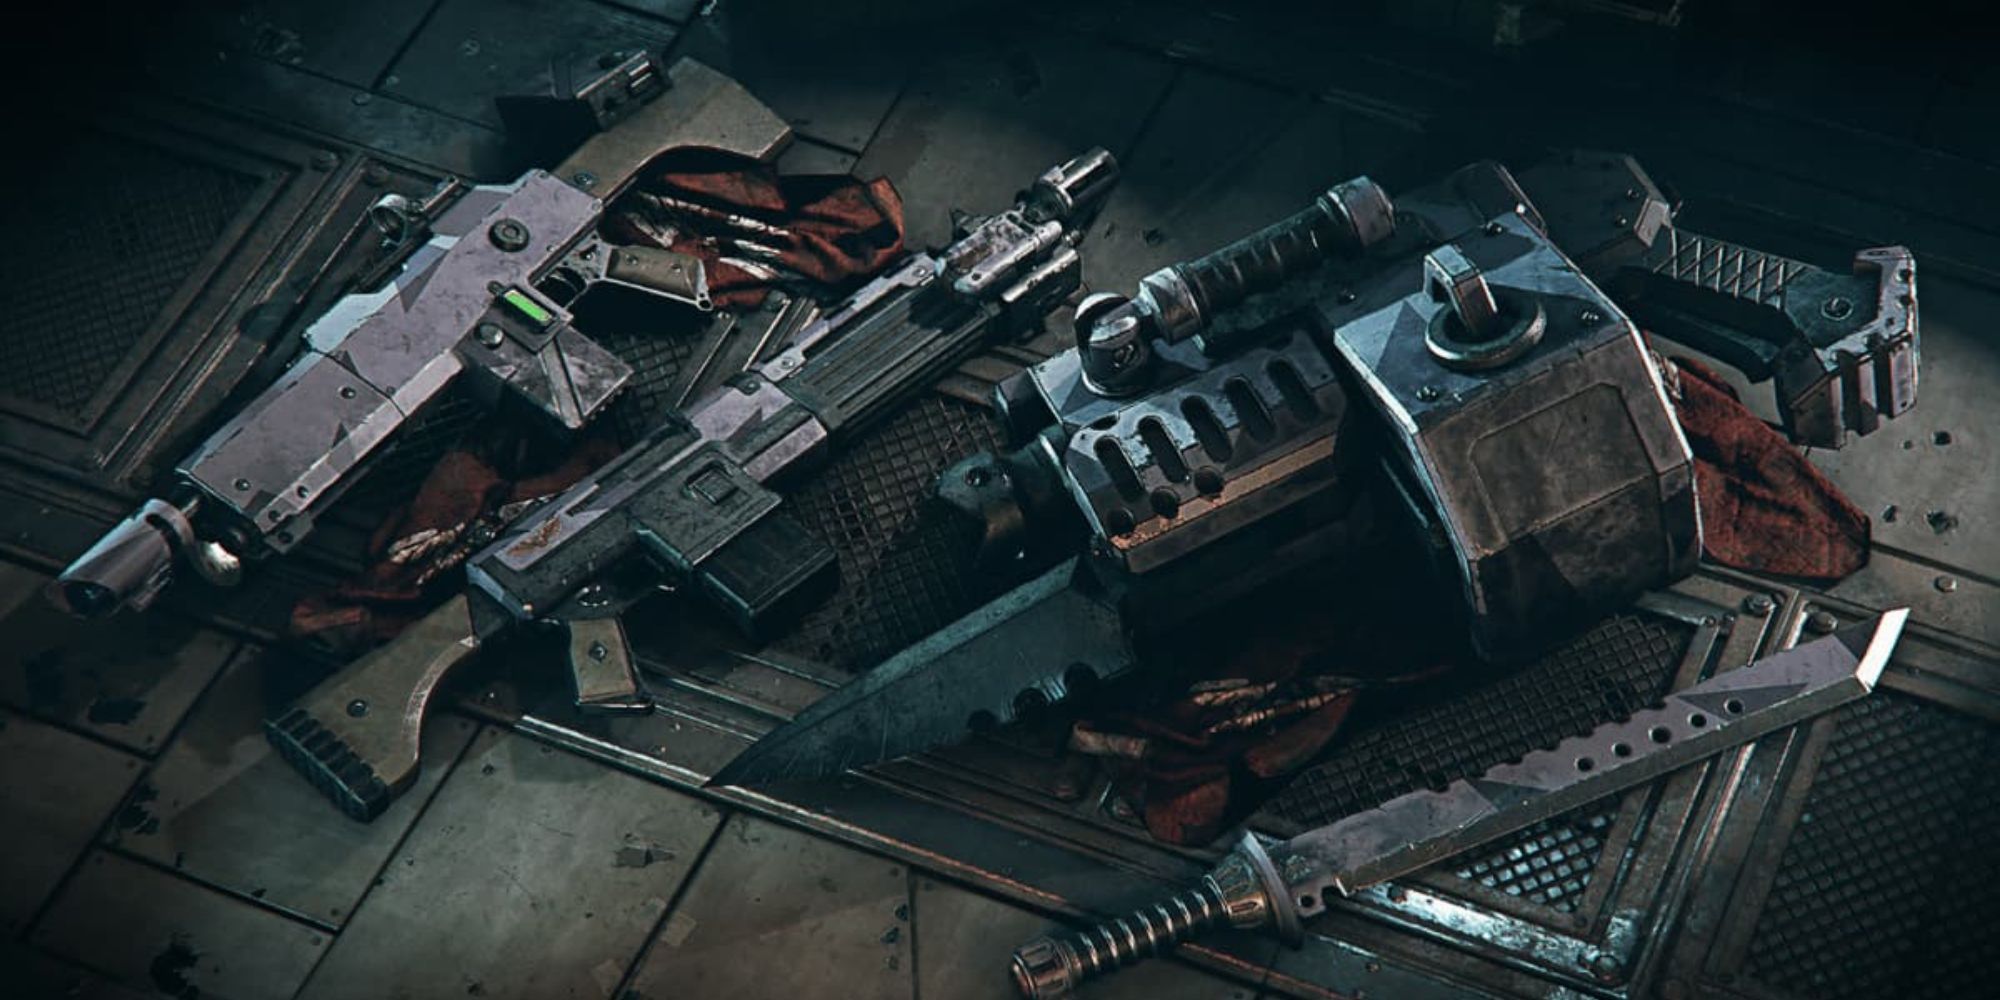 Weapons on display in Warhammer 40,000: Darktide